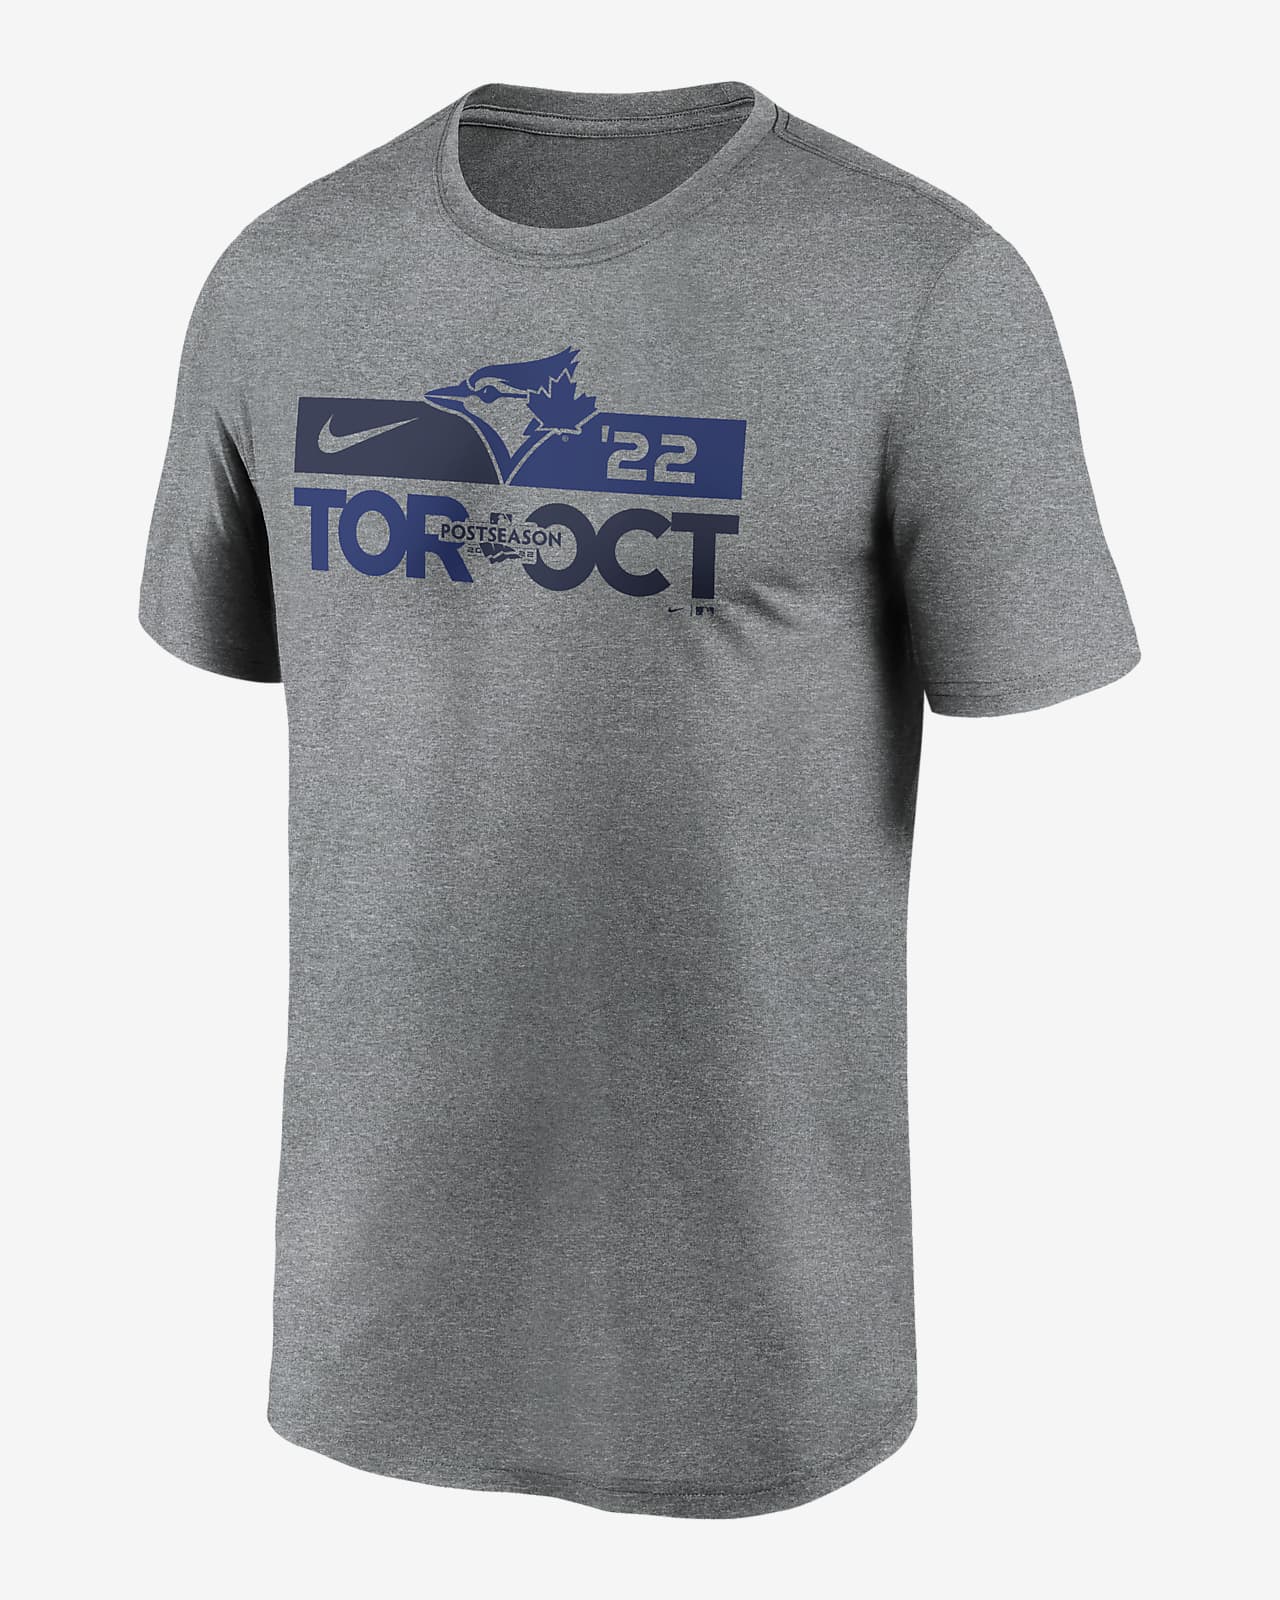 Mlb Toronto Blue Jays Take October Playoffs Postseason 2023 Shirt